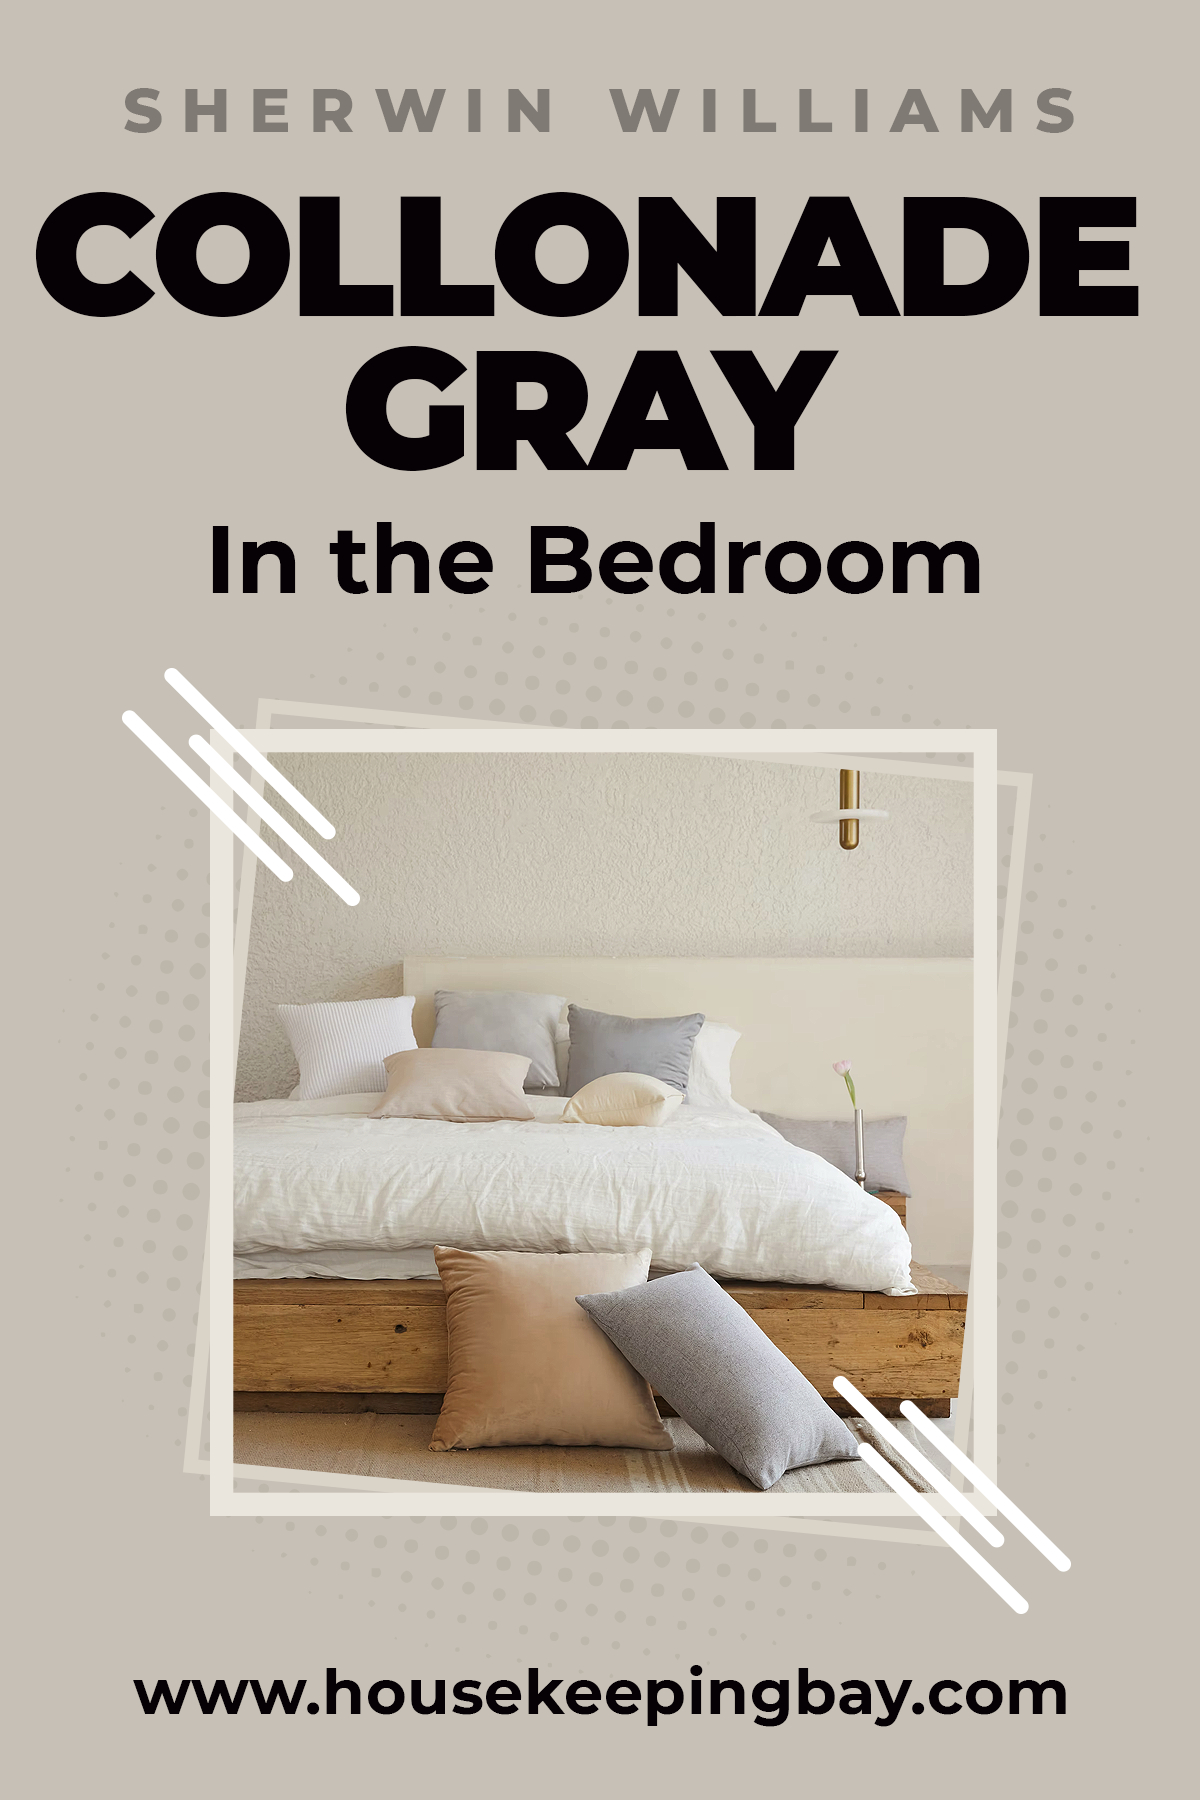 Collonade gray in the bedroom